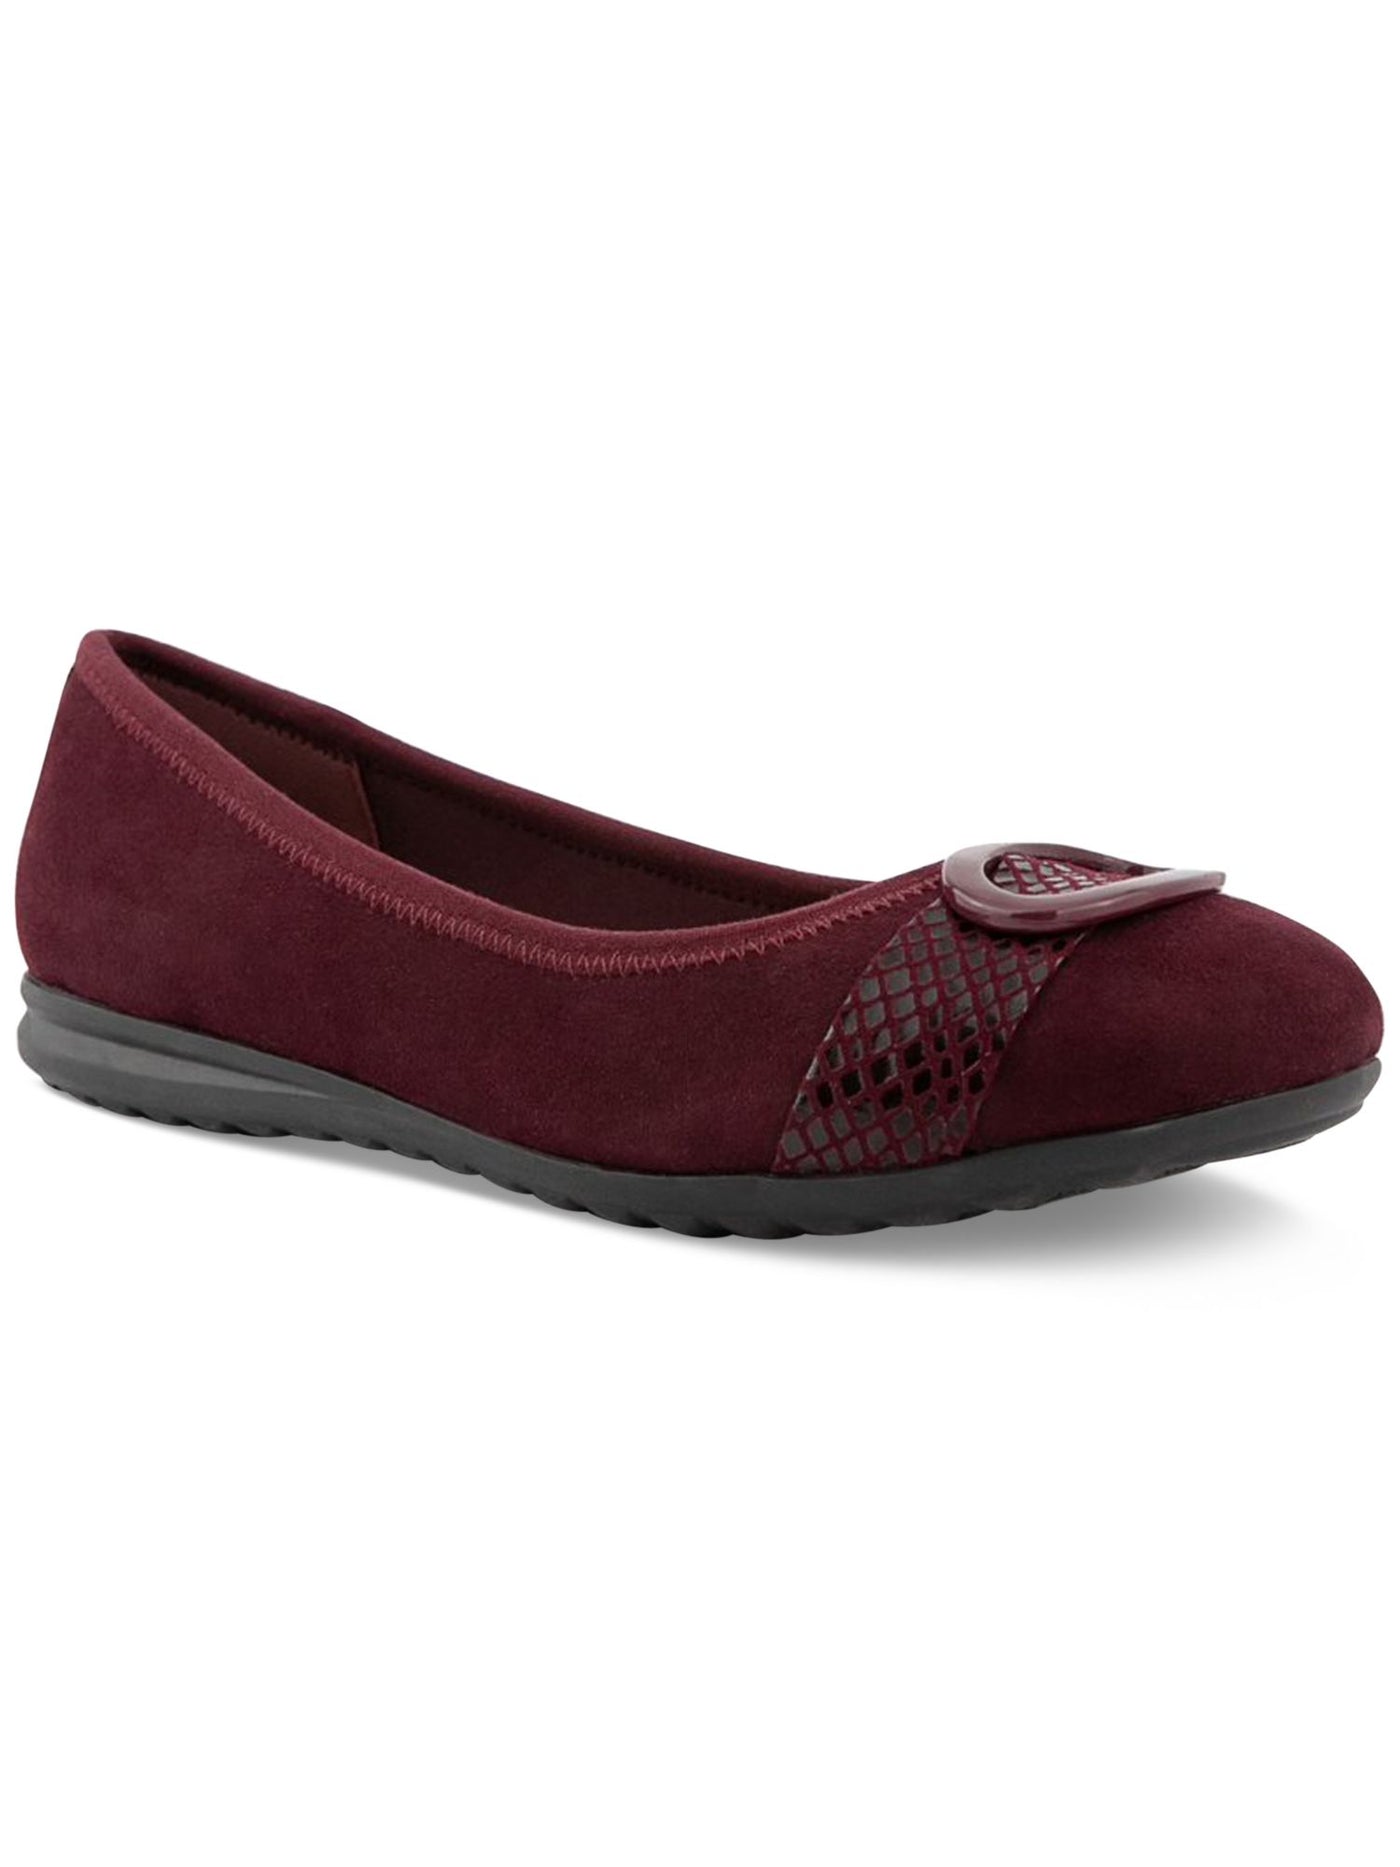 KAREN SCOTT Womens Burgundy Cushioned Tashelle Round Toe Slip On Flats Shoes 6.5 M